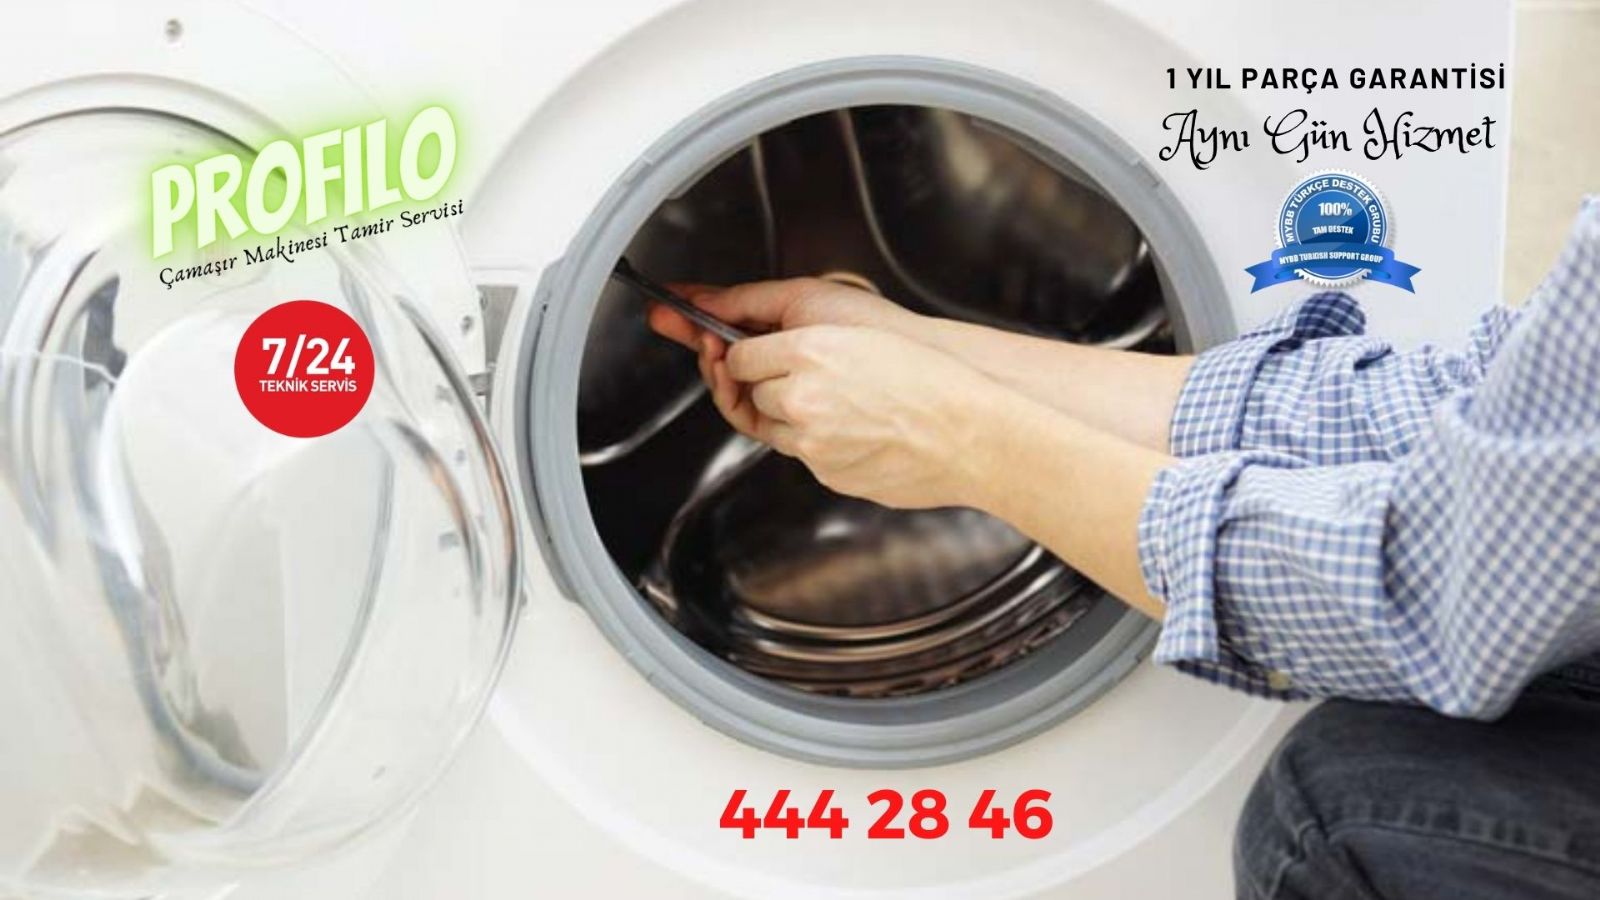 profilo çamaşır makinesi servisi